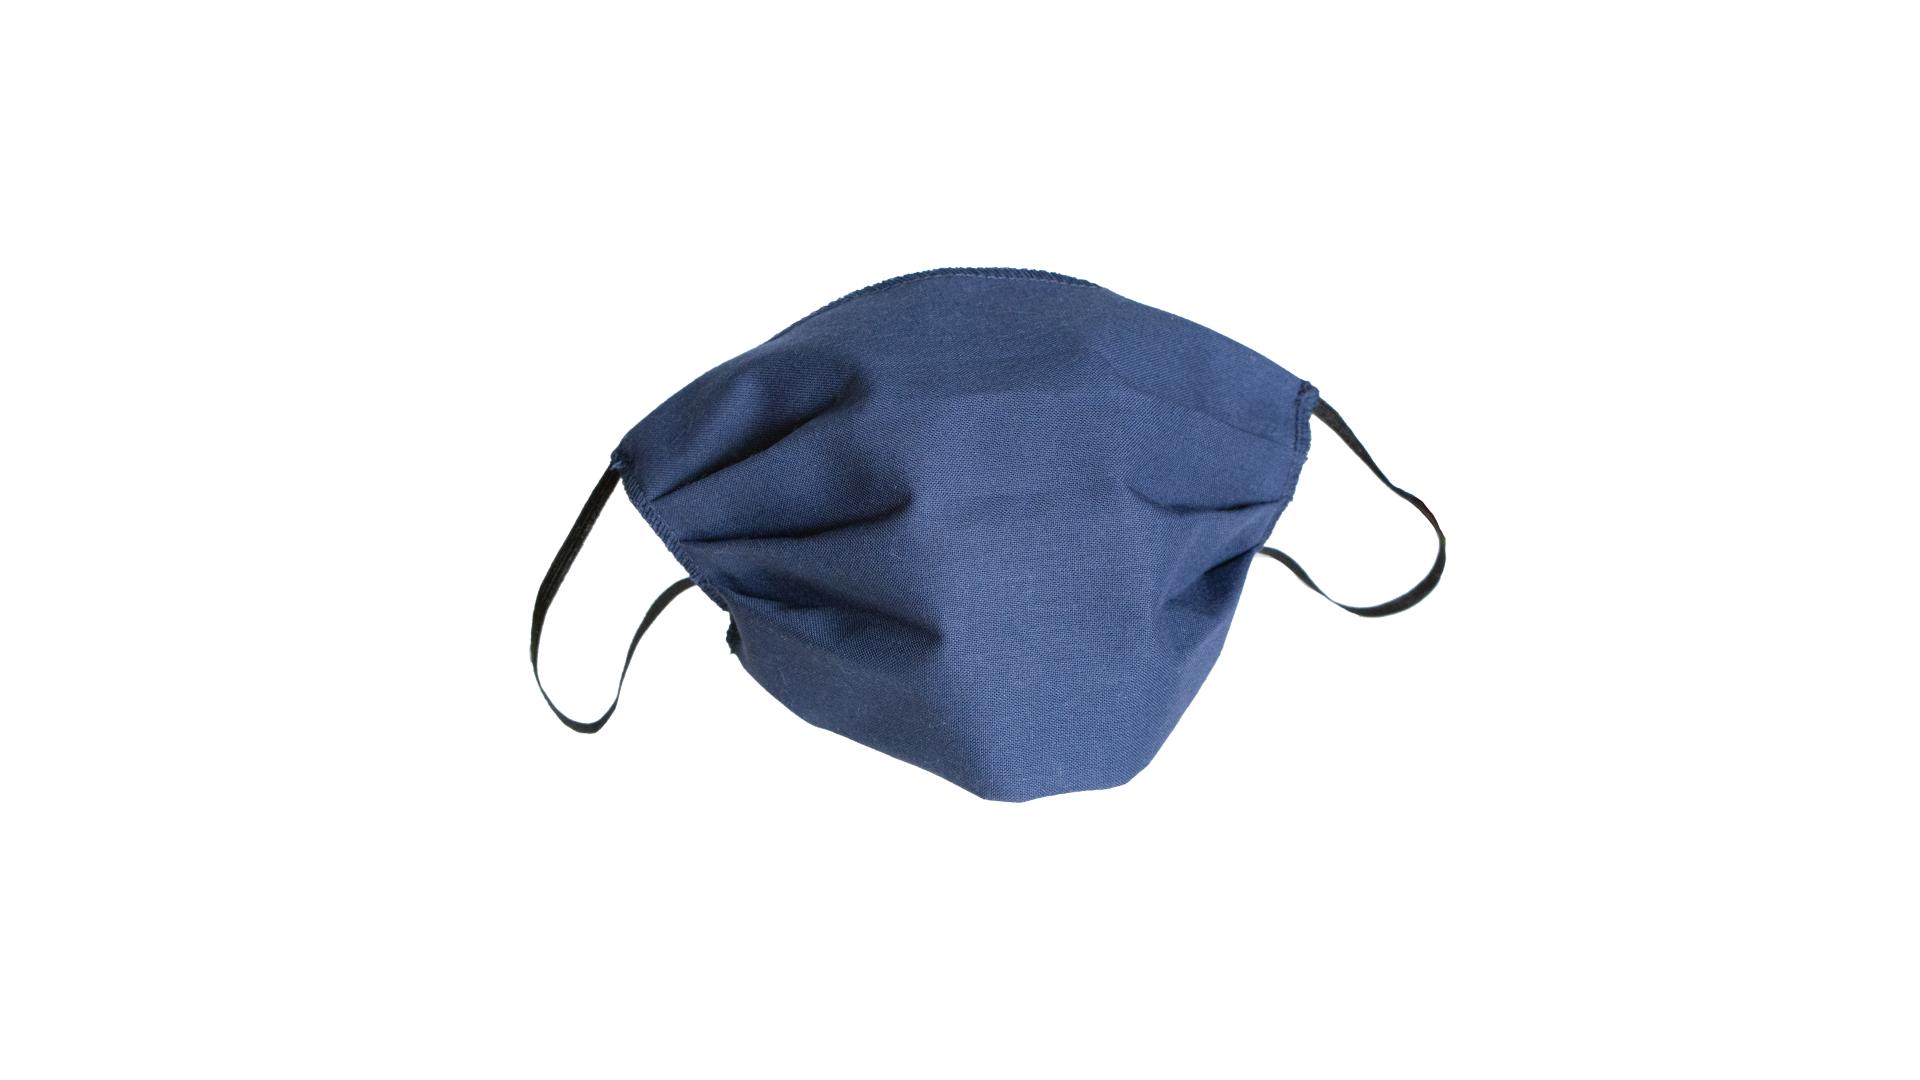 4CARS Dvouvrstvé ochranné bavlněné rouško modré bez vzoru s gumičkou 1ks